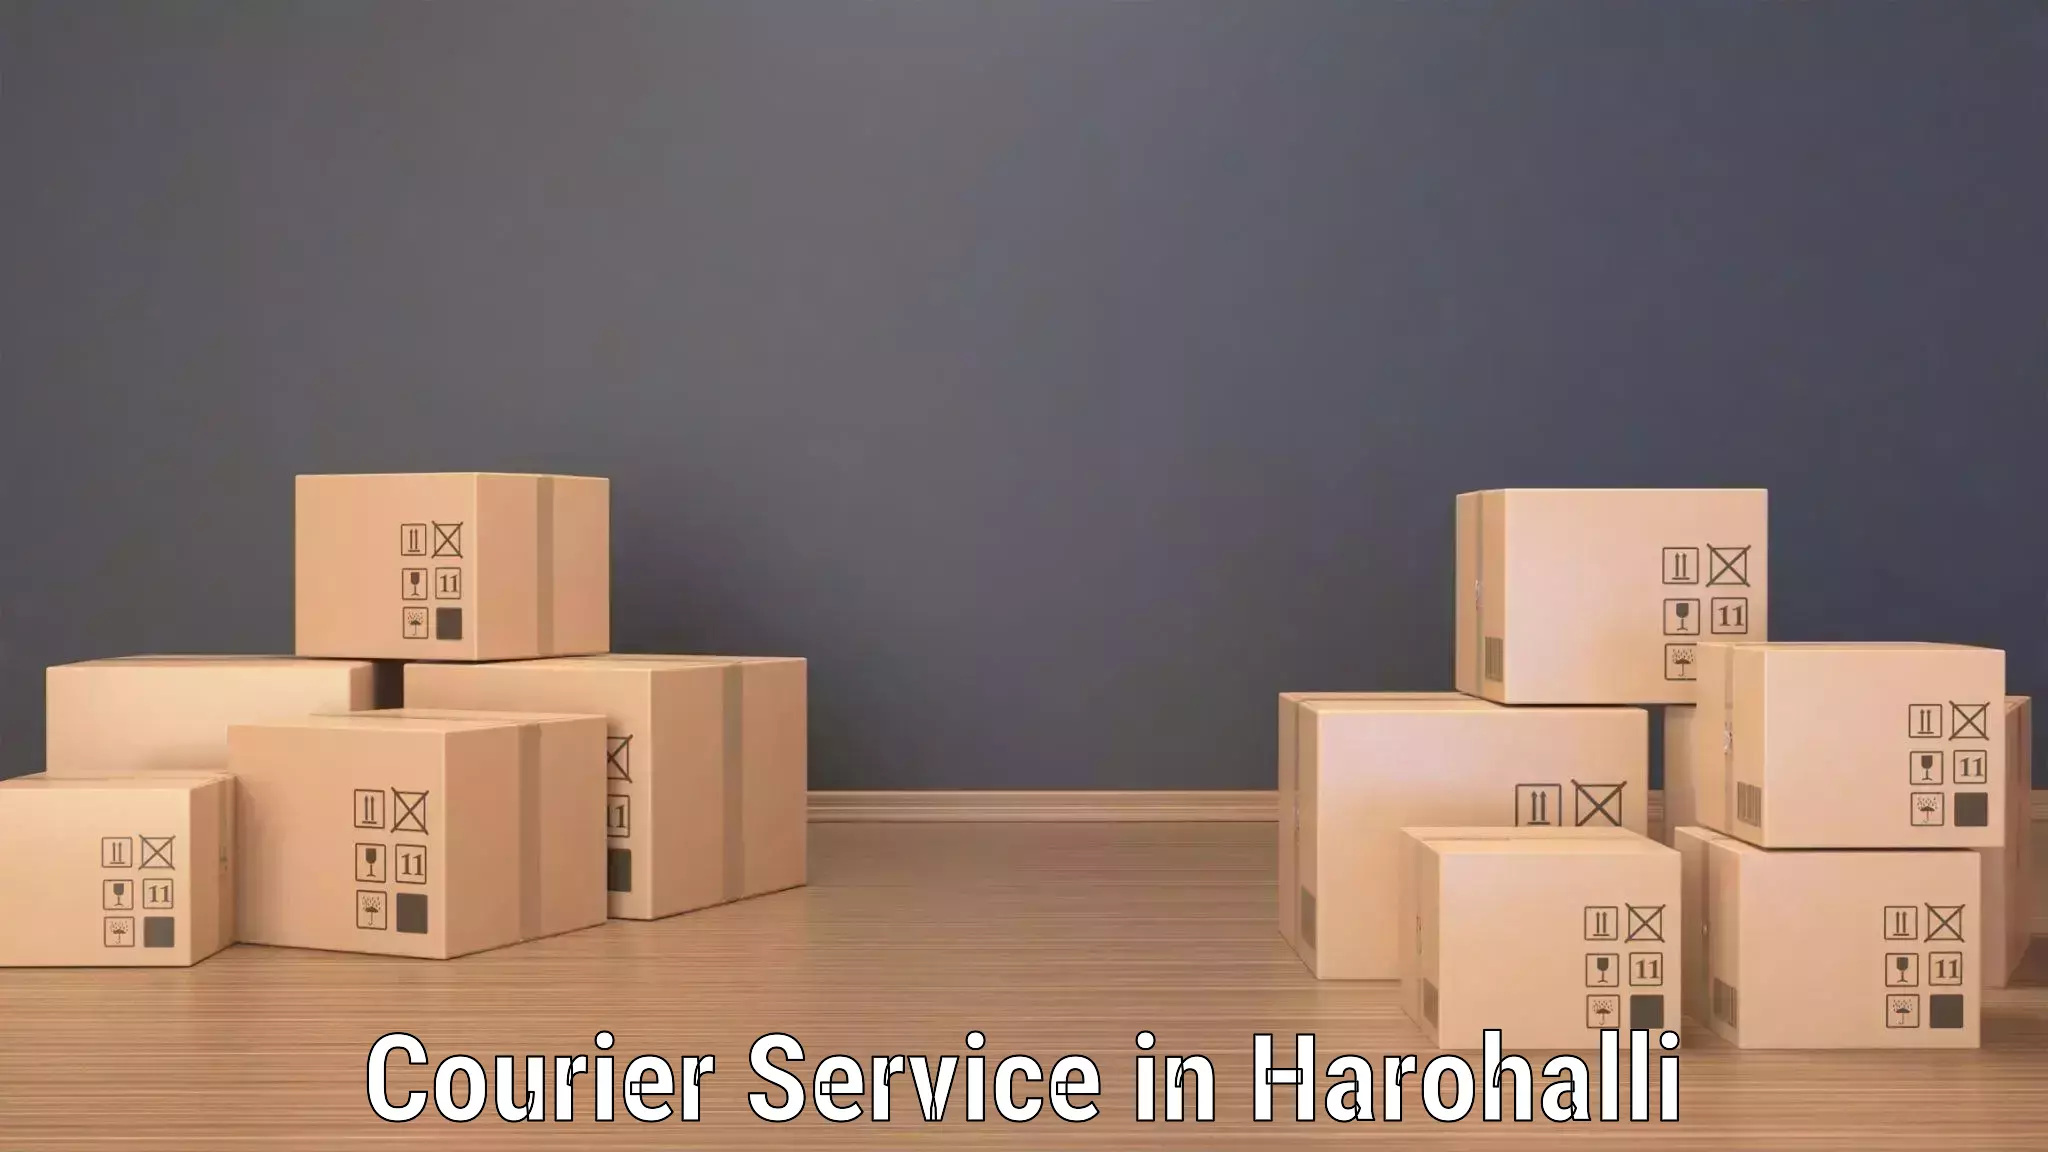 Advanced logistics management in Harohalli